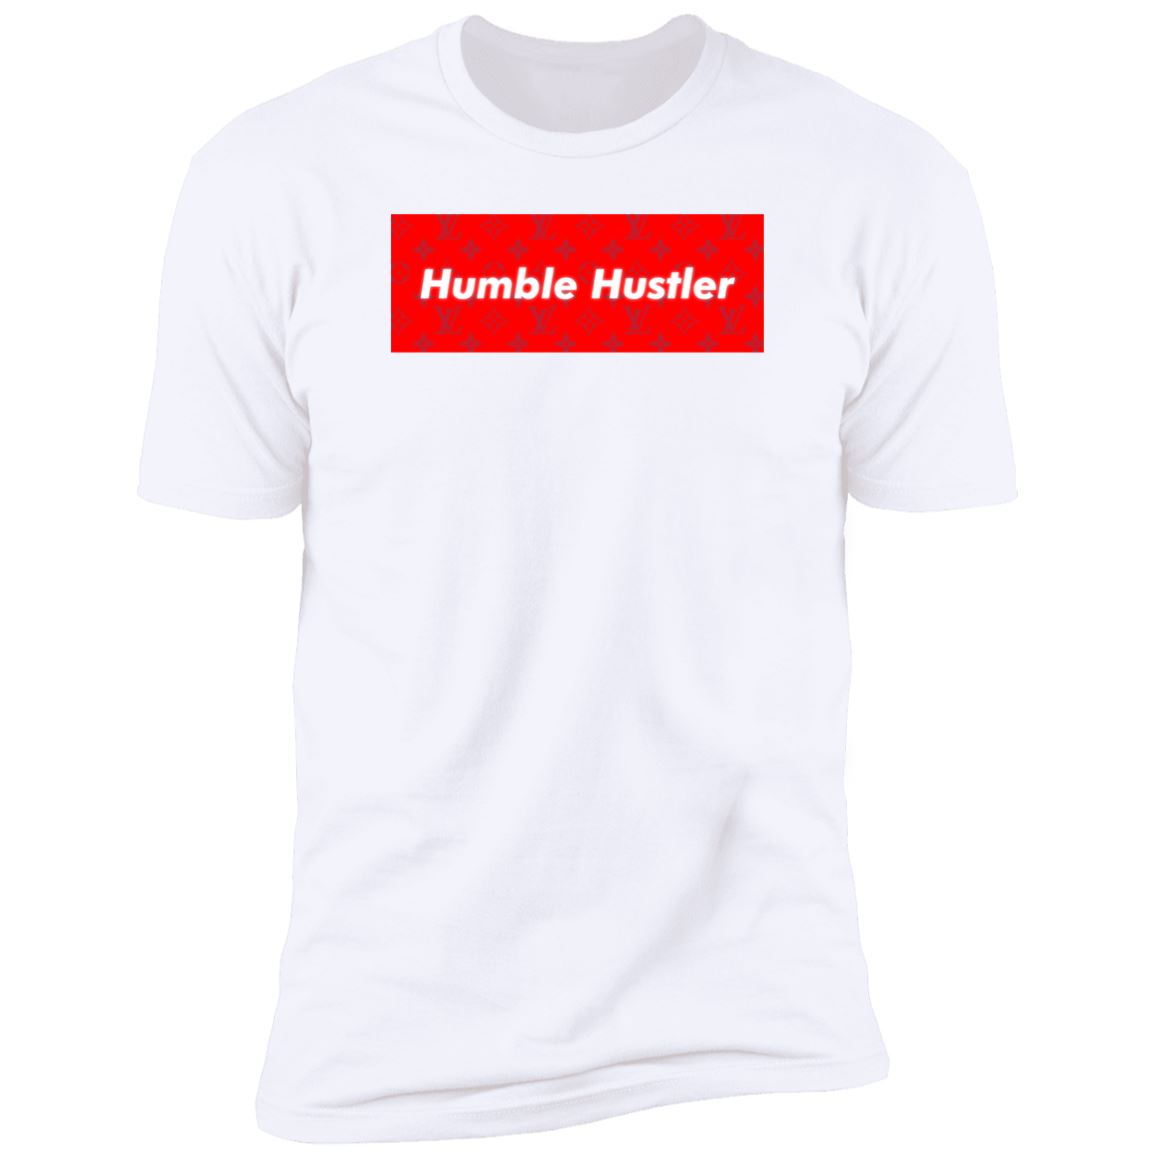 Humble Hustler Apparel